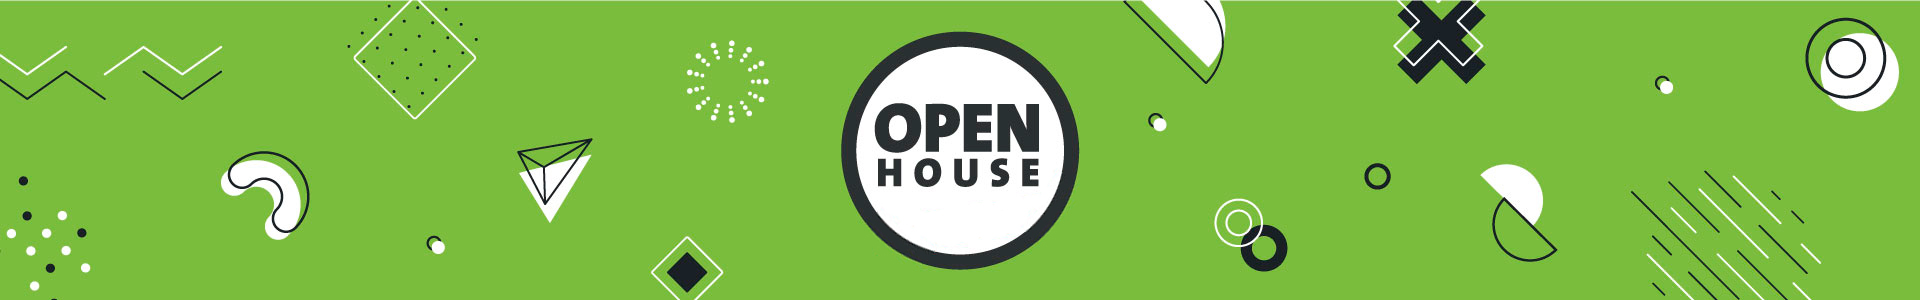 Open House - Universidad ORT Uruguay